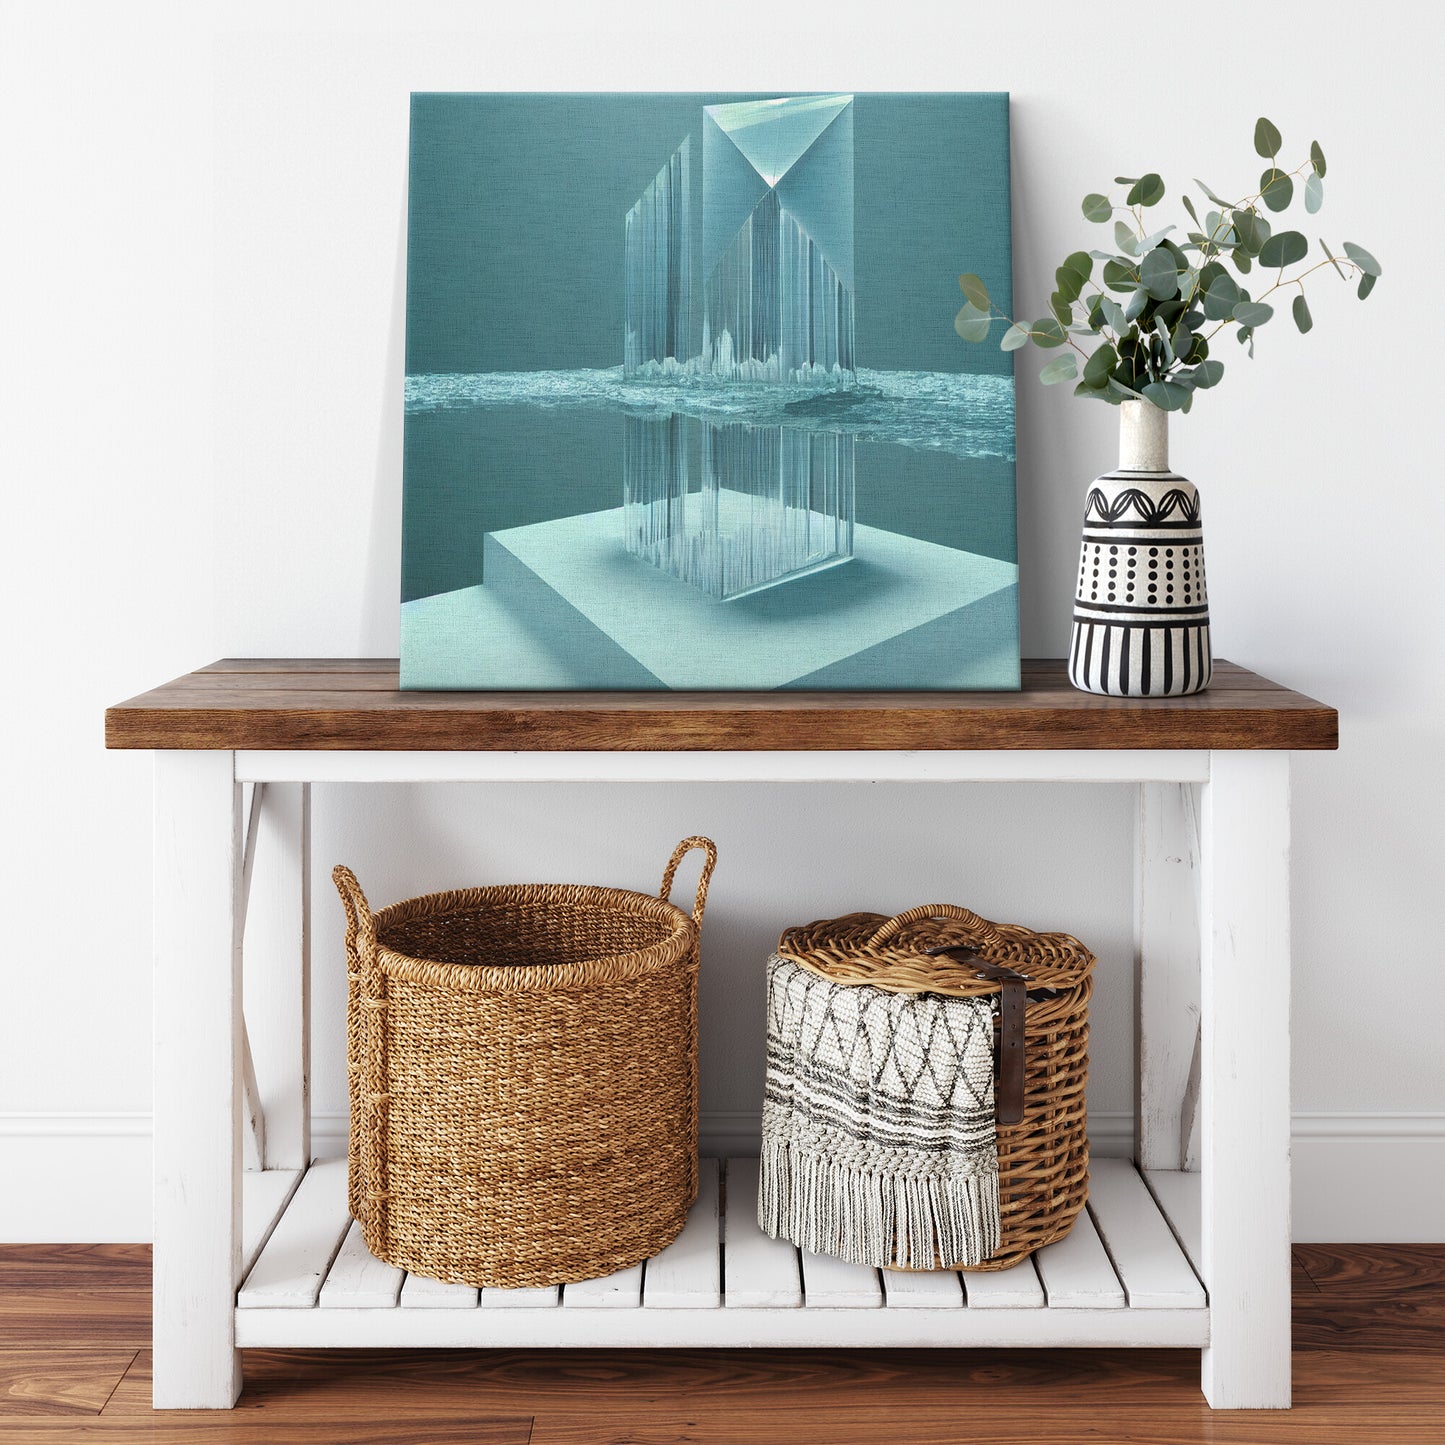 Abstract Waterfall Concept Art, Geometric Glass Concept Art, Midjourney AI Art